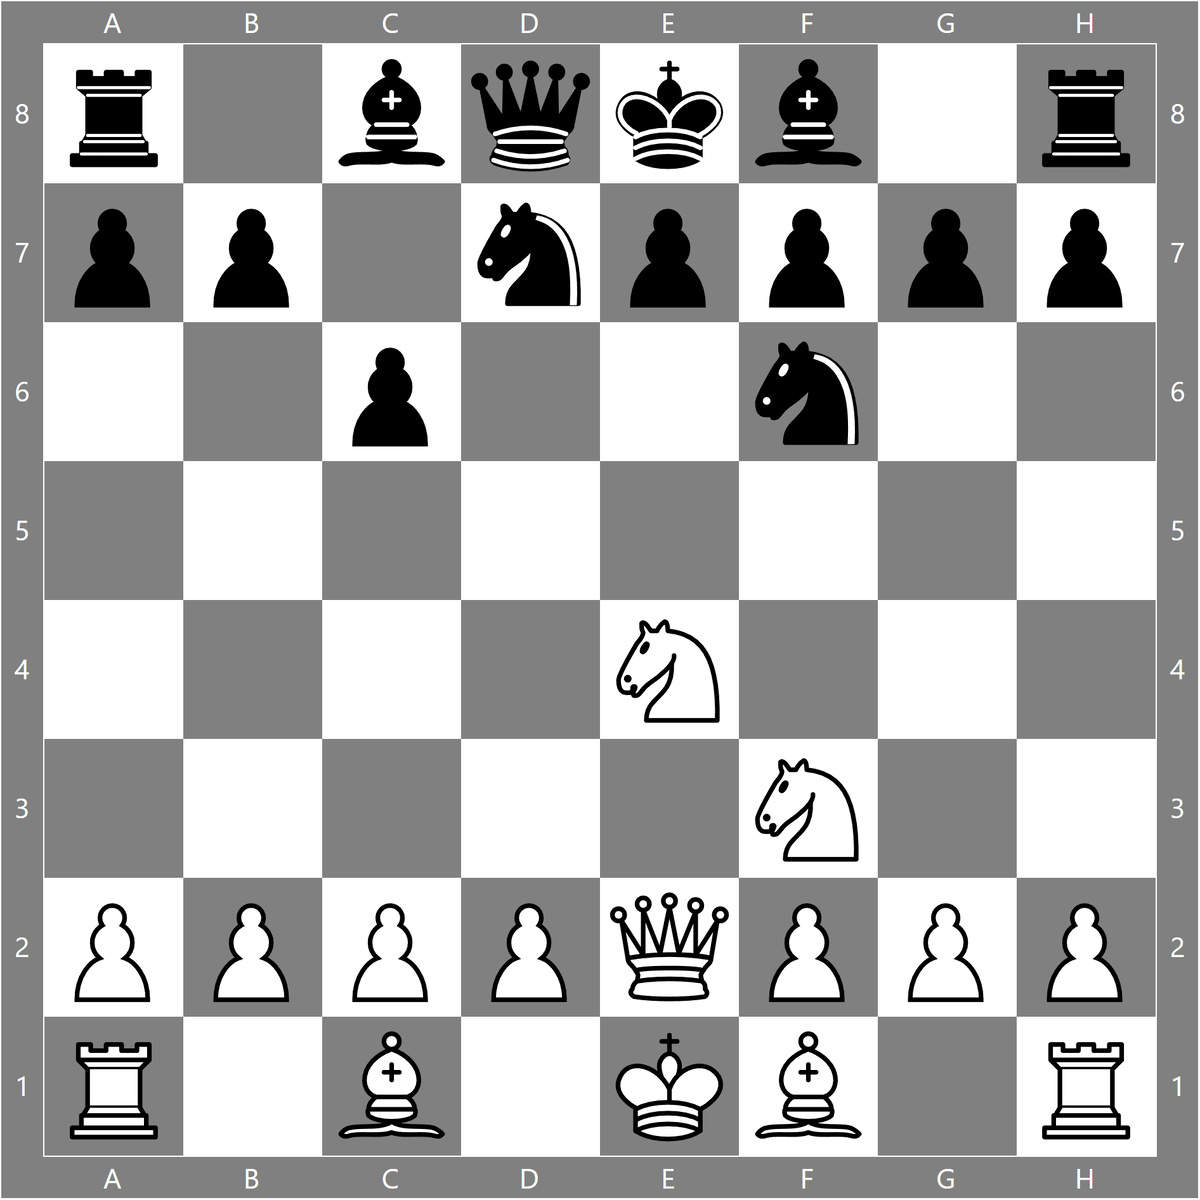 решение шахматных задач по фото